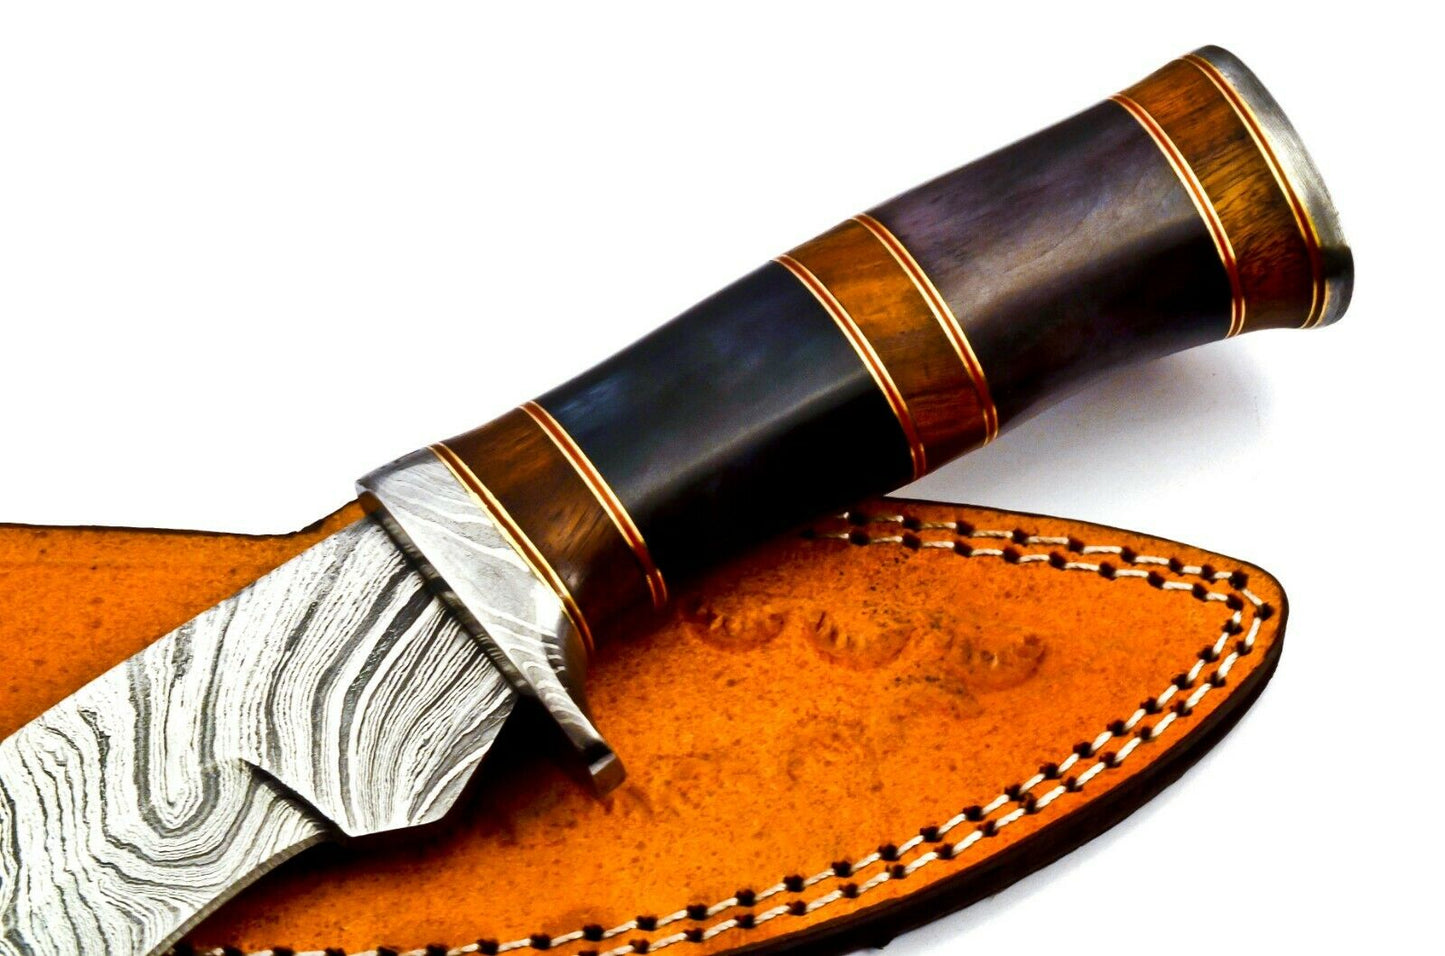 Handmade Damascus Heavy Duty KUKRI Knife Sharp Blade, With Leather Sheath 38cm